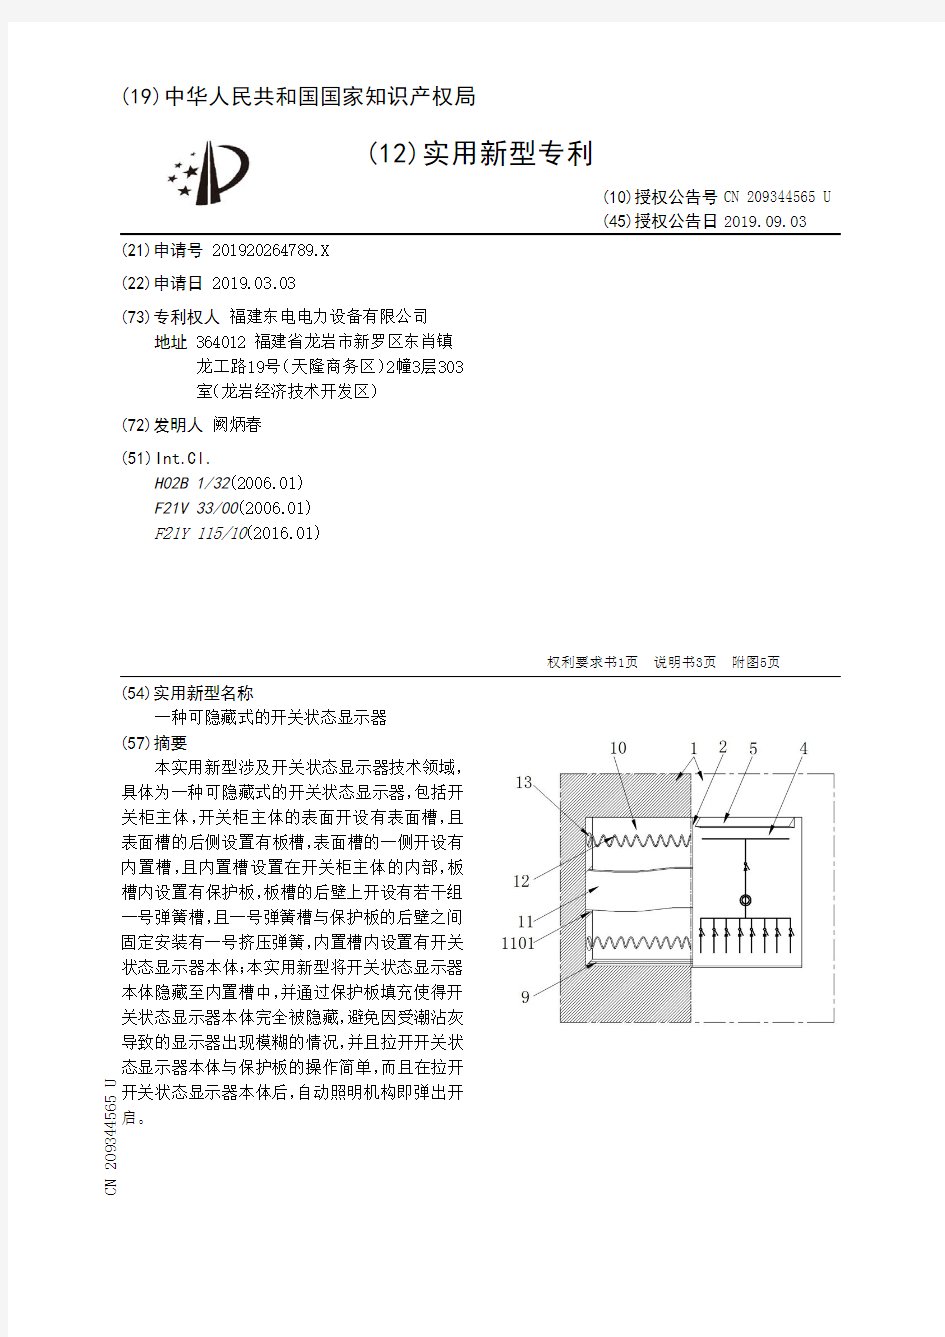 【CN209344565U】一种可隐藏式的开关状态显示器【专利】